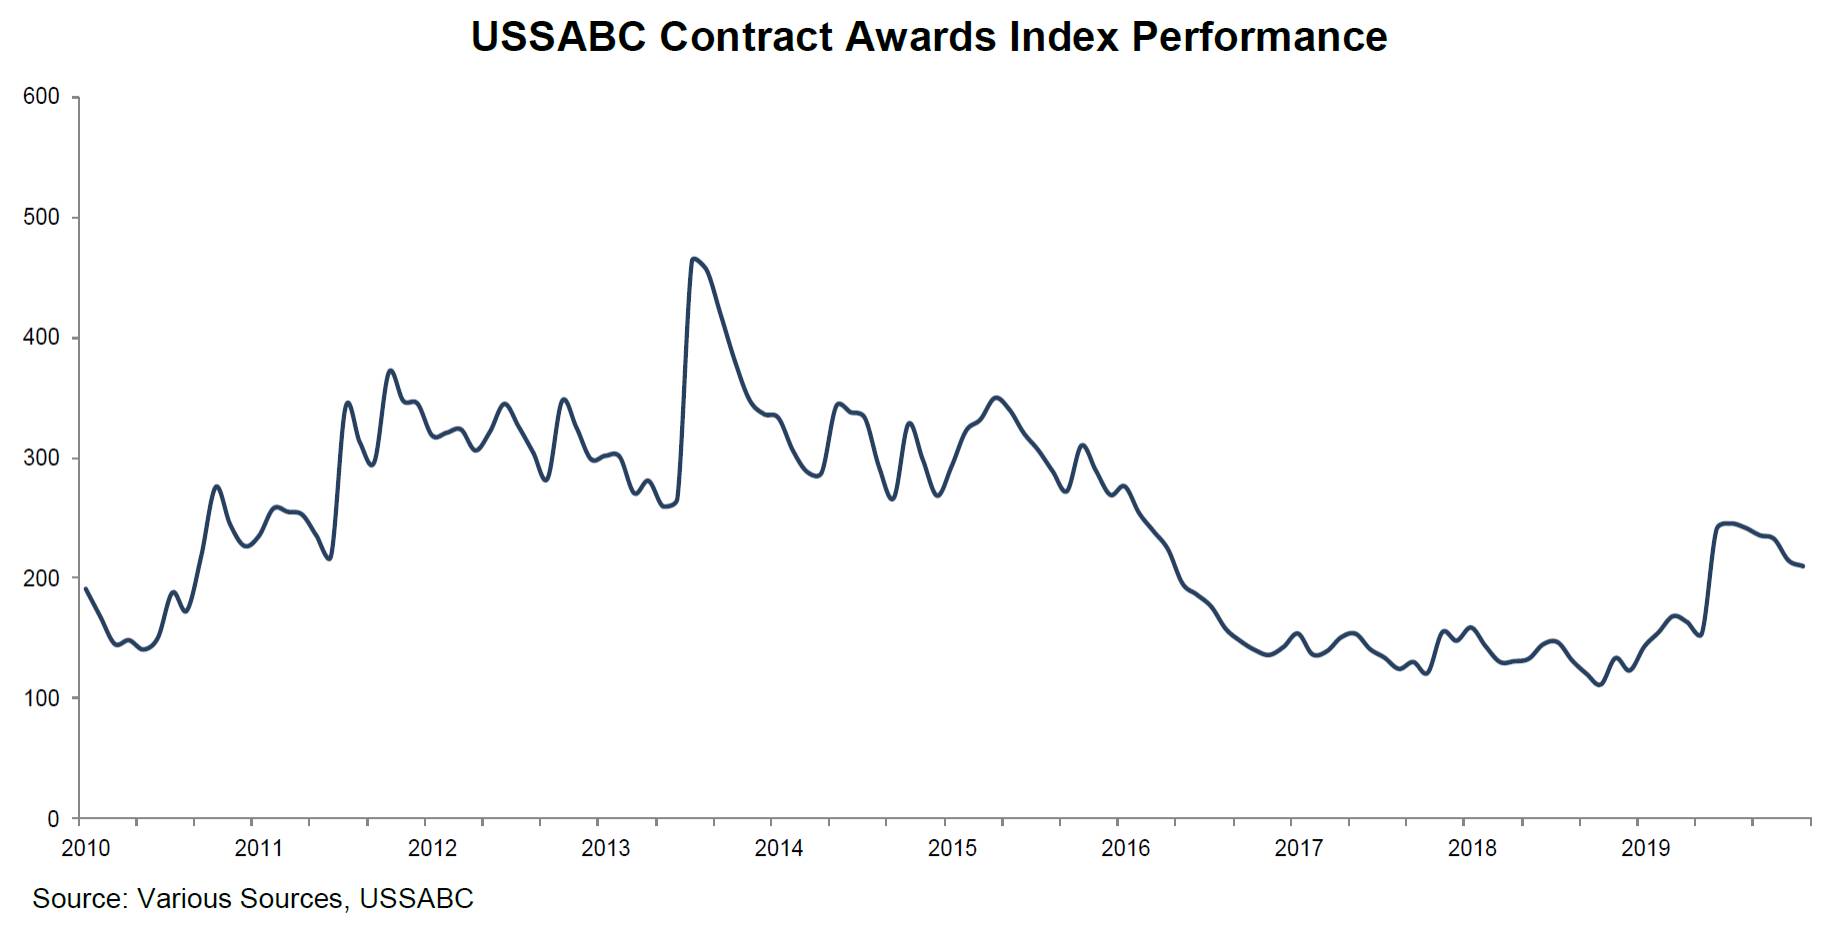 USSABC Contract Awards Index Performance